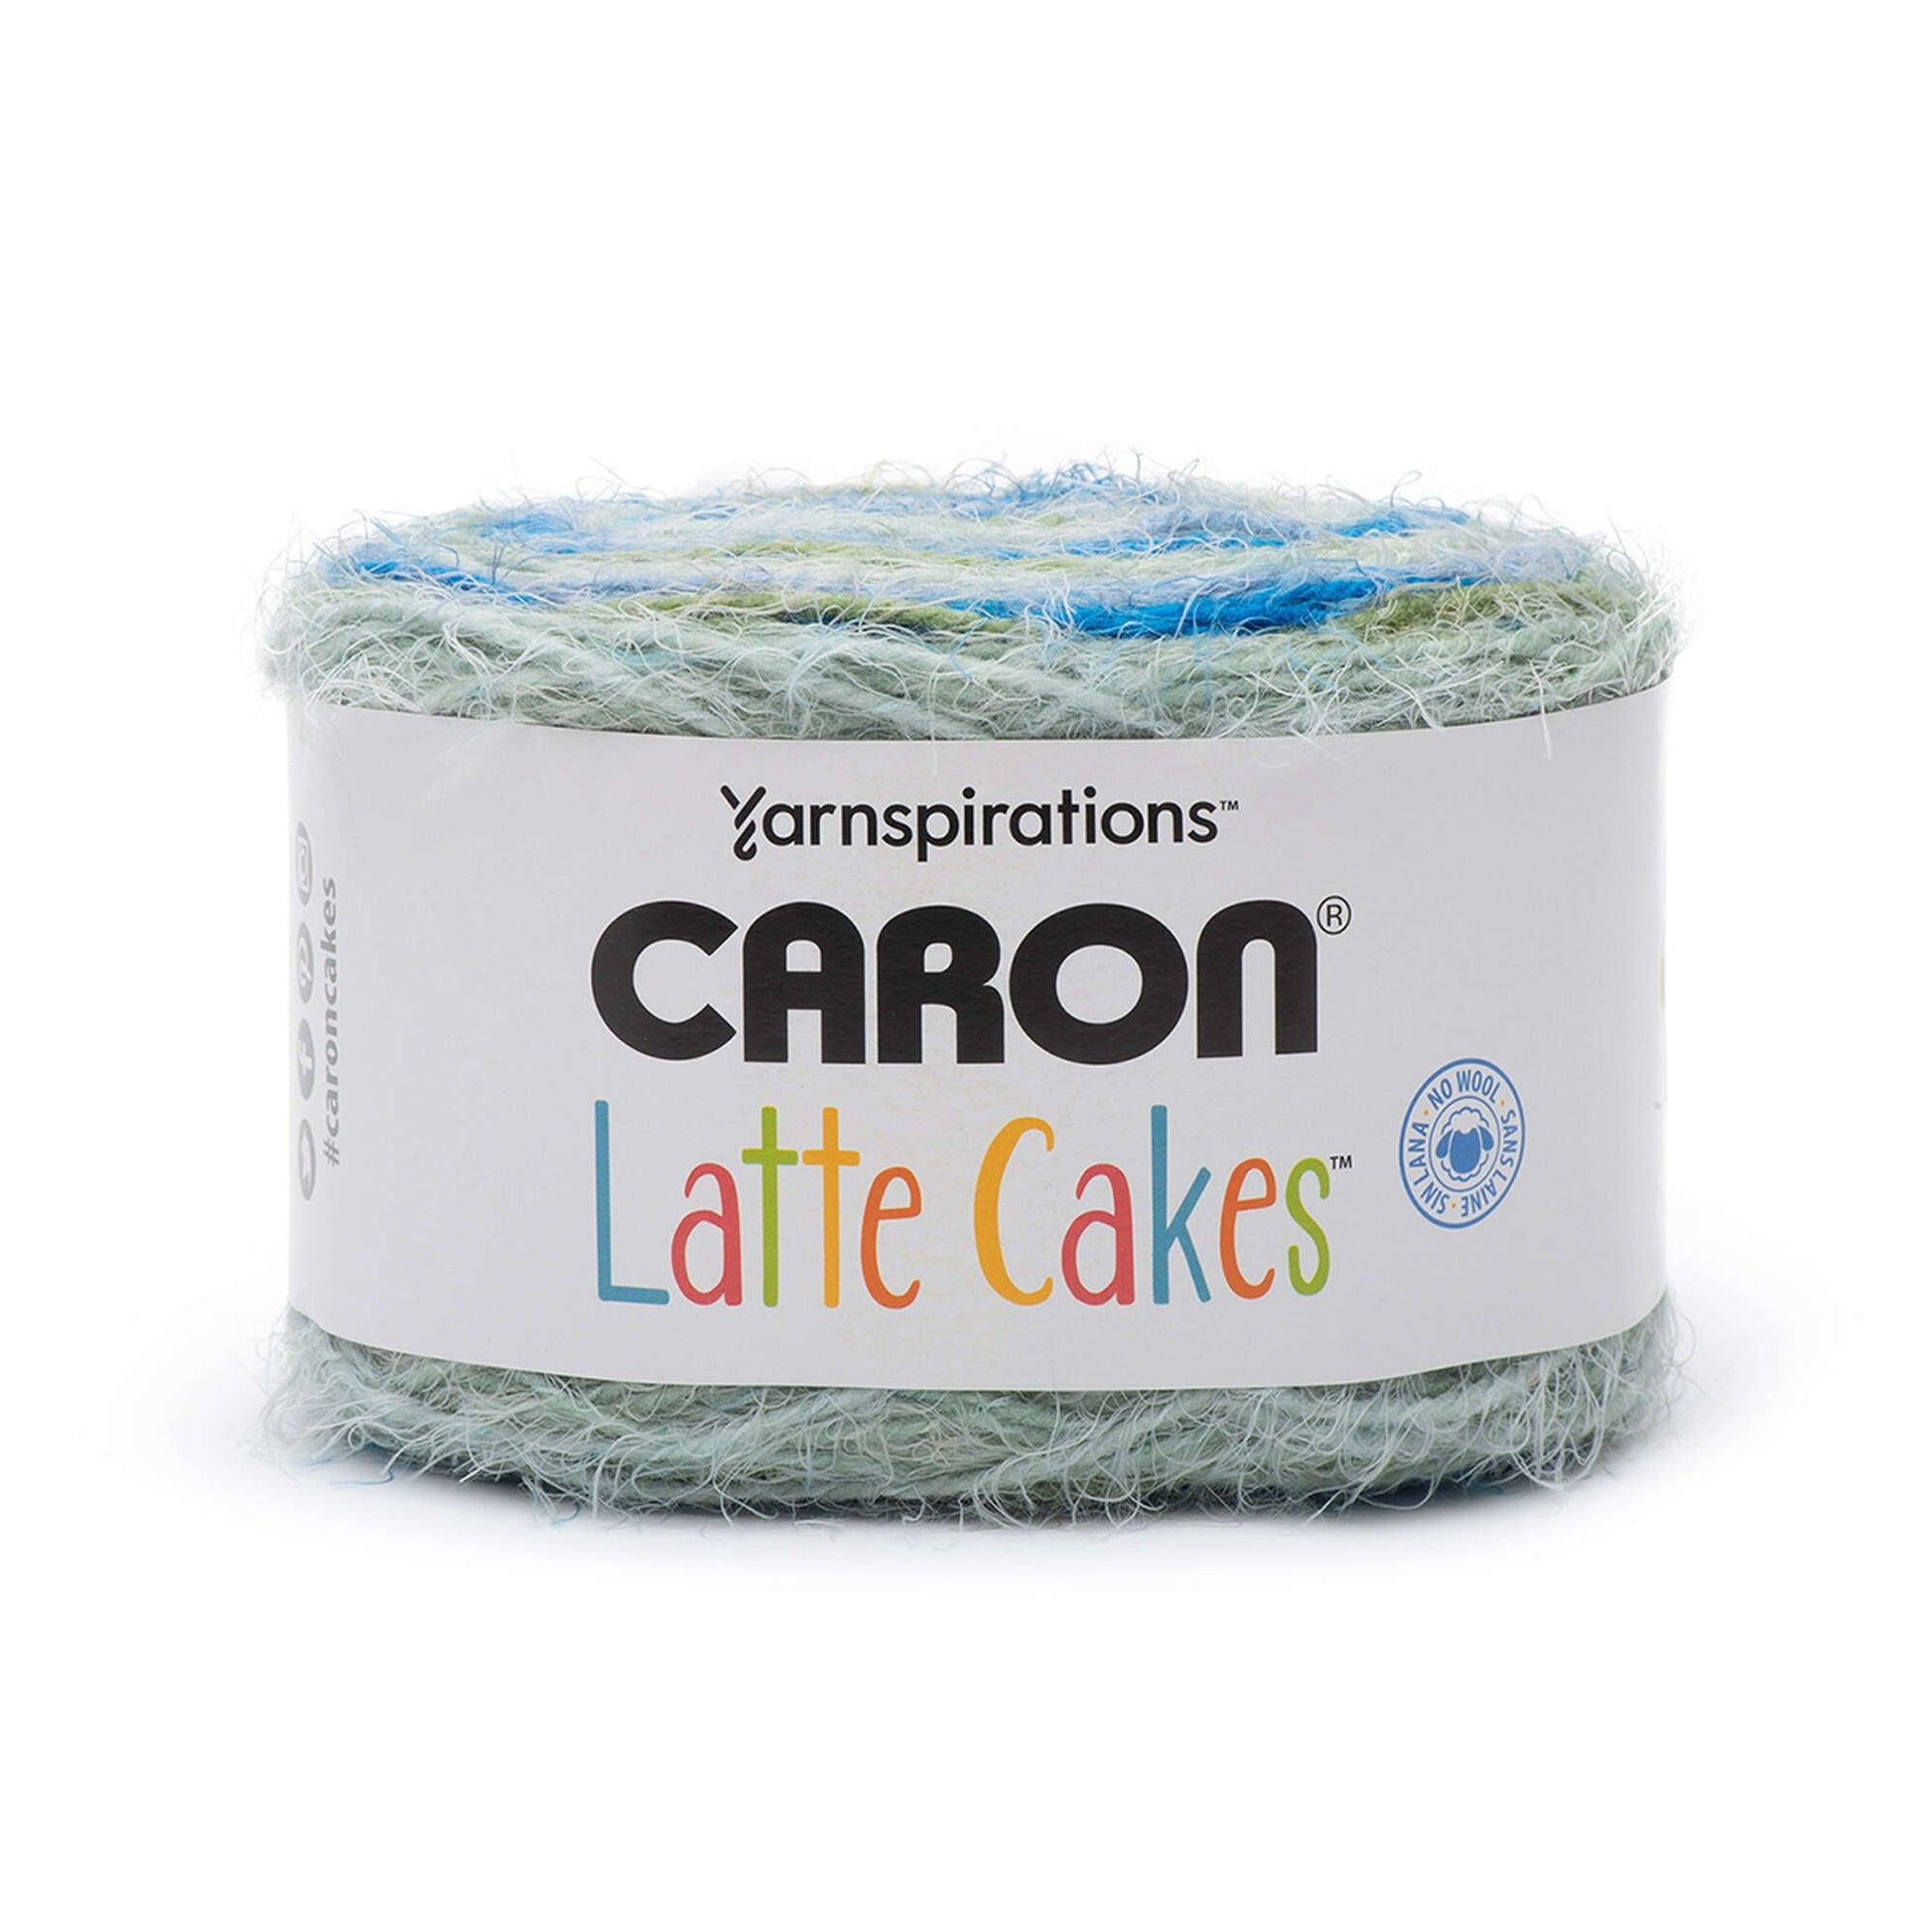 Caron Latte Cakes Rose Scented